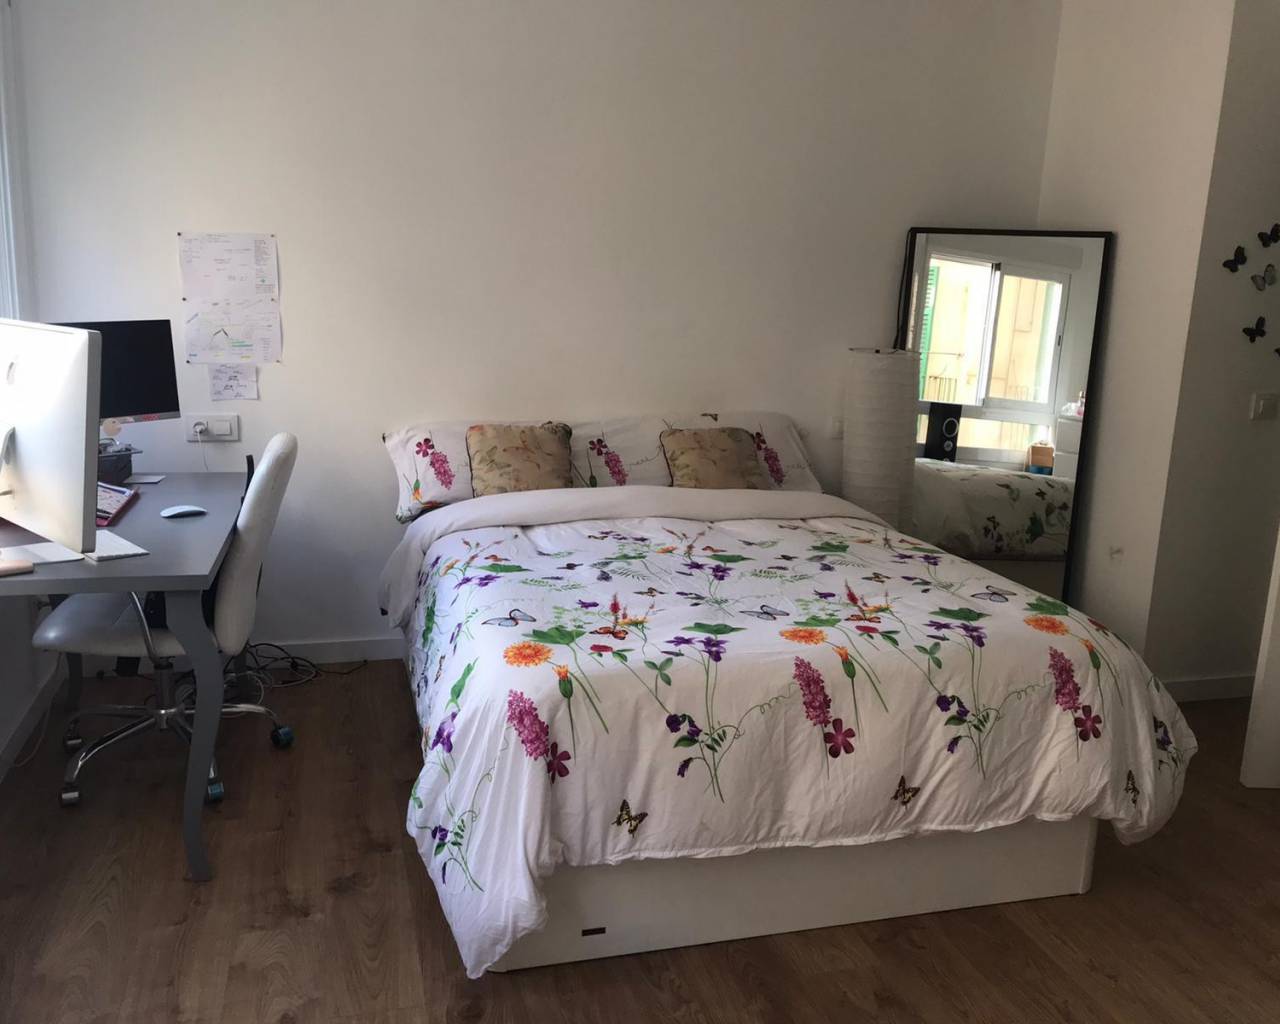 3 bed flat in rent,Palma Mallorca